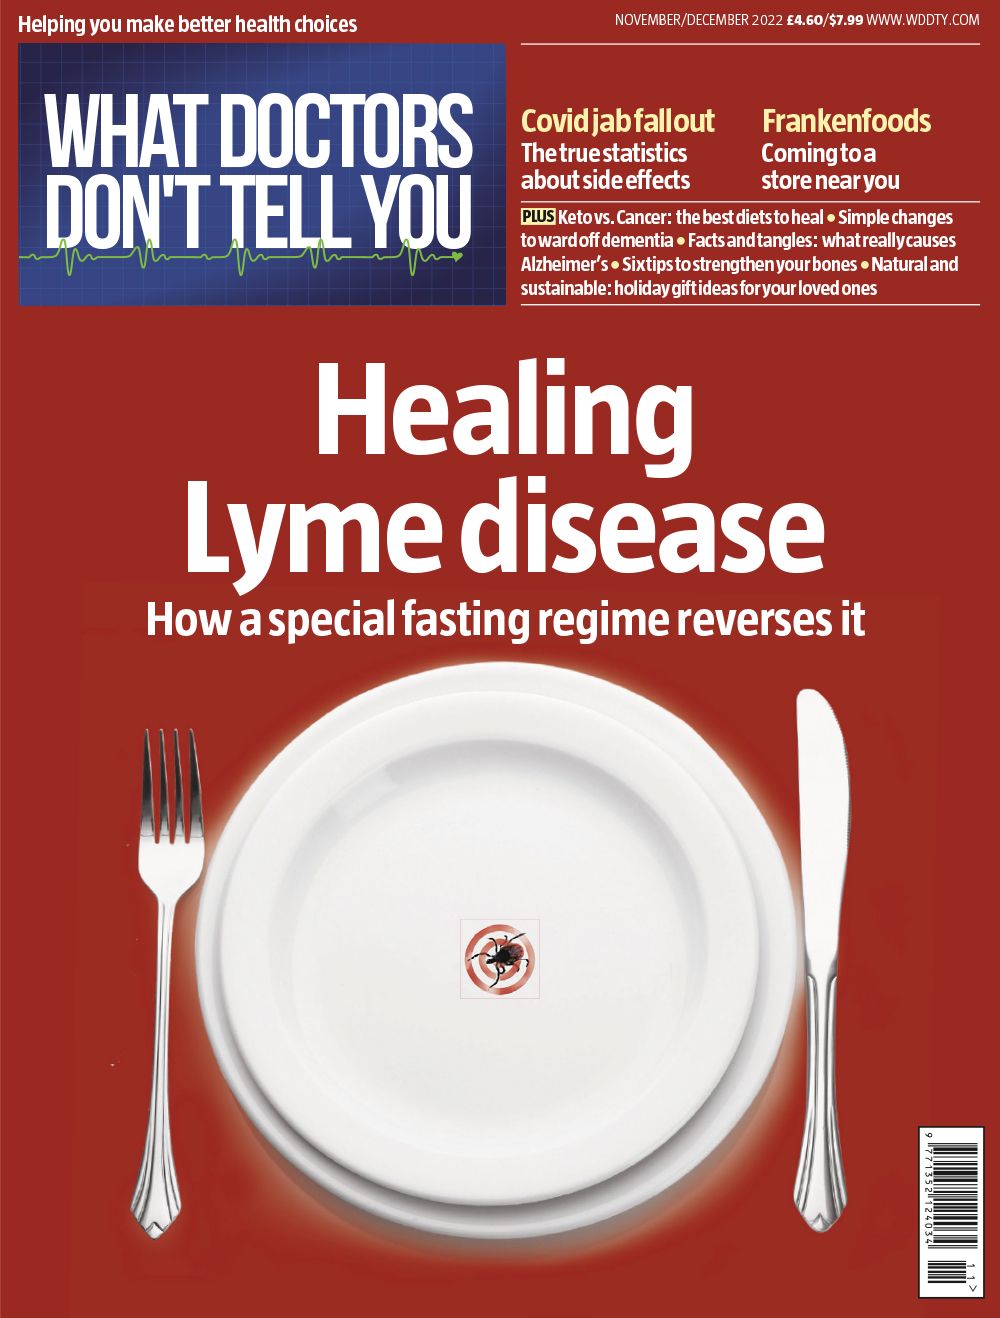 WDDTY health magazine - Healing Lyme disease